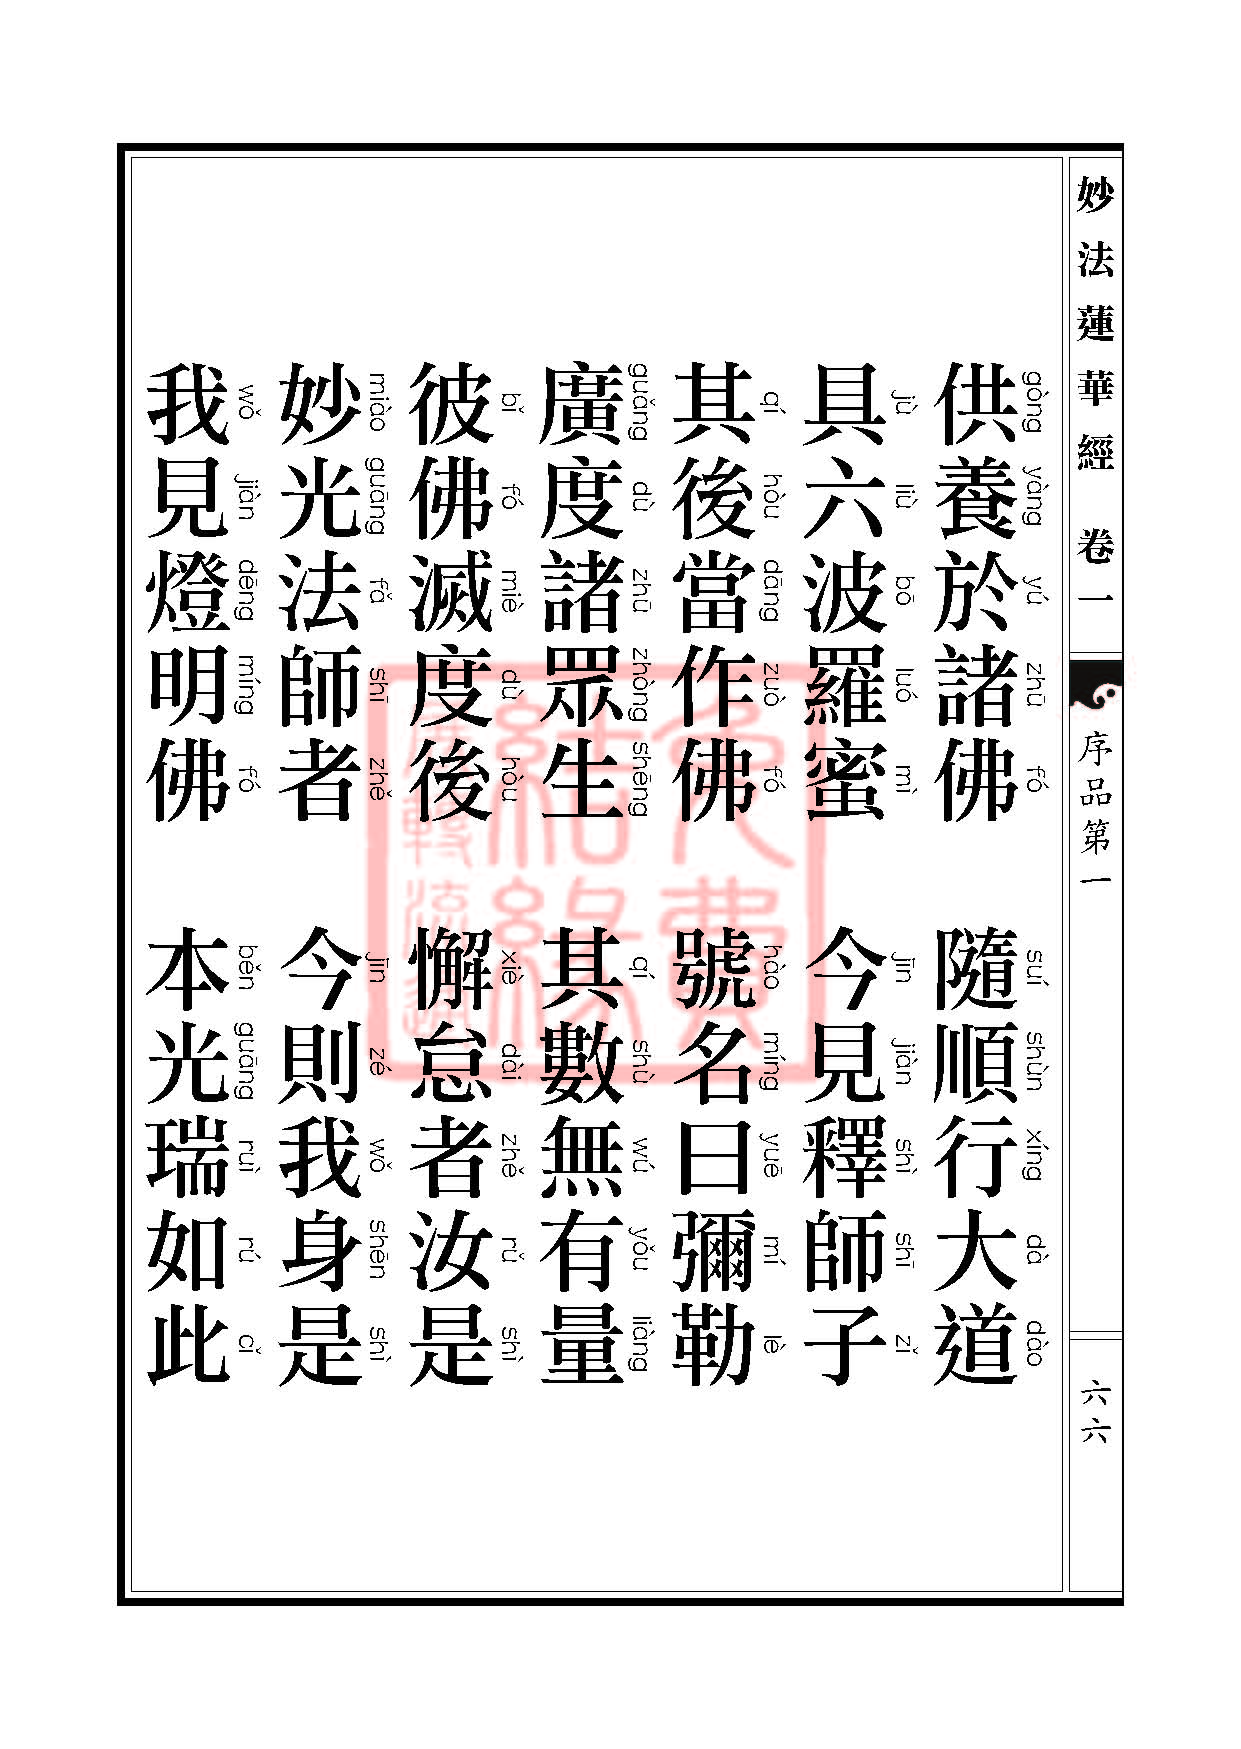 Book_FHJ_HK-A6-PY_Web_页面_066.jpg